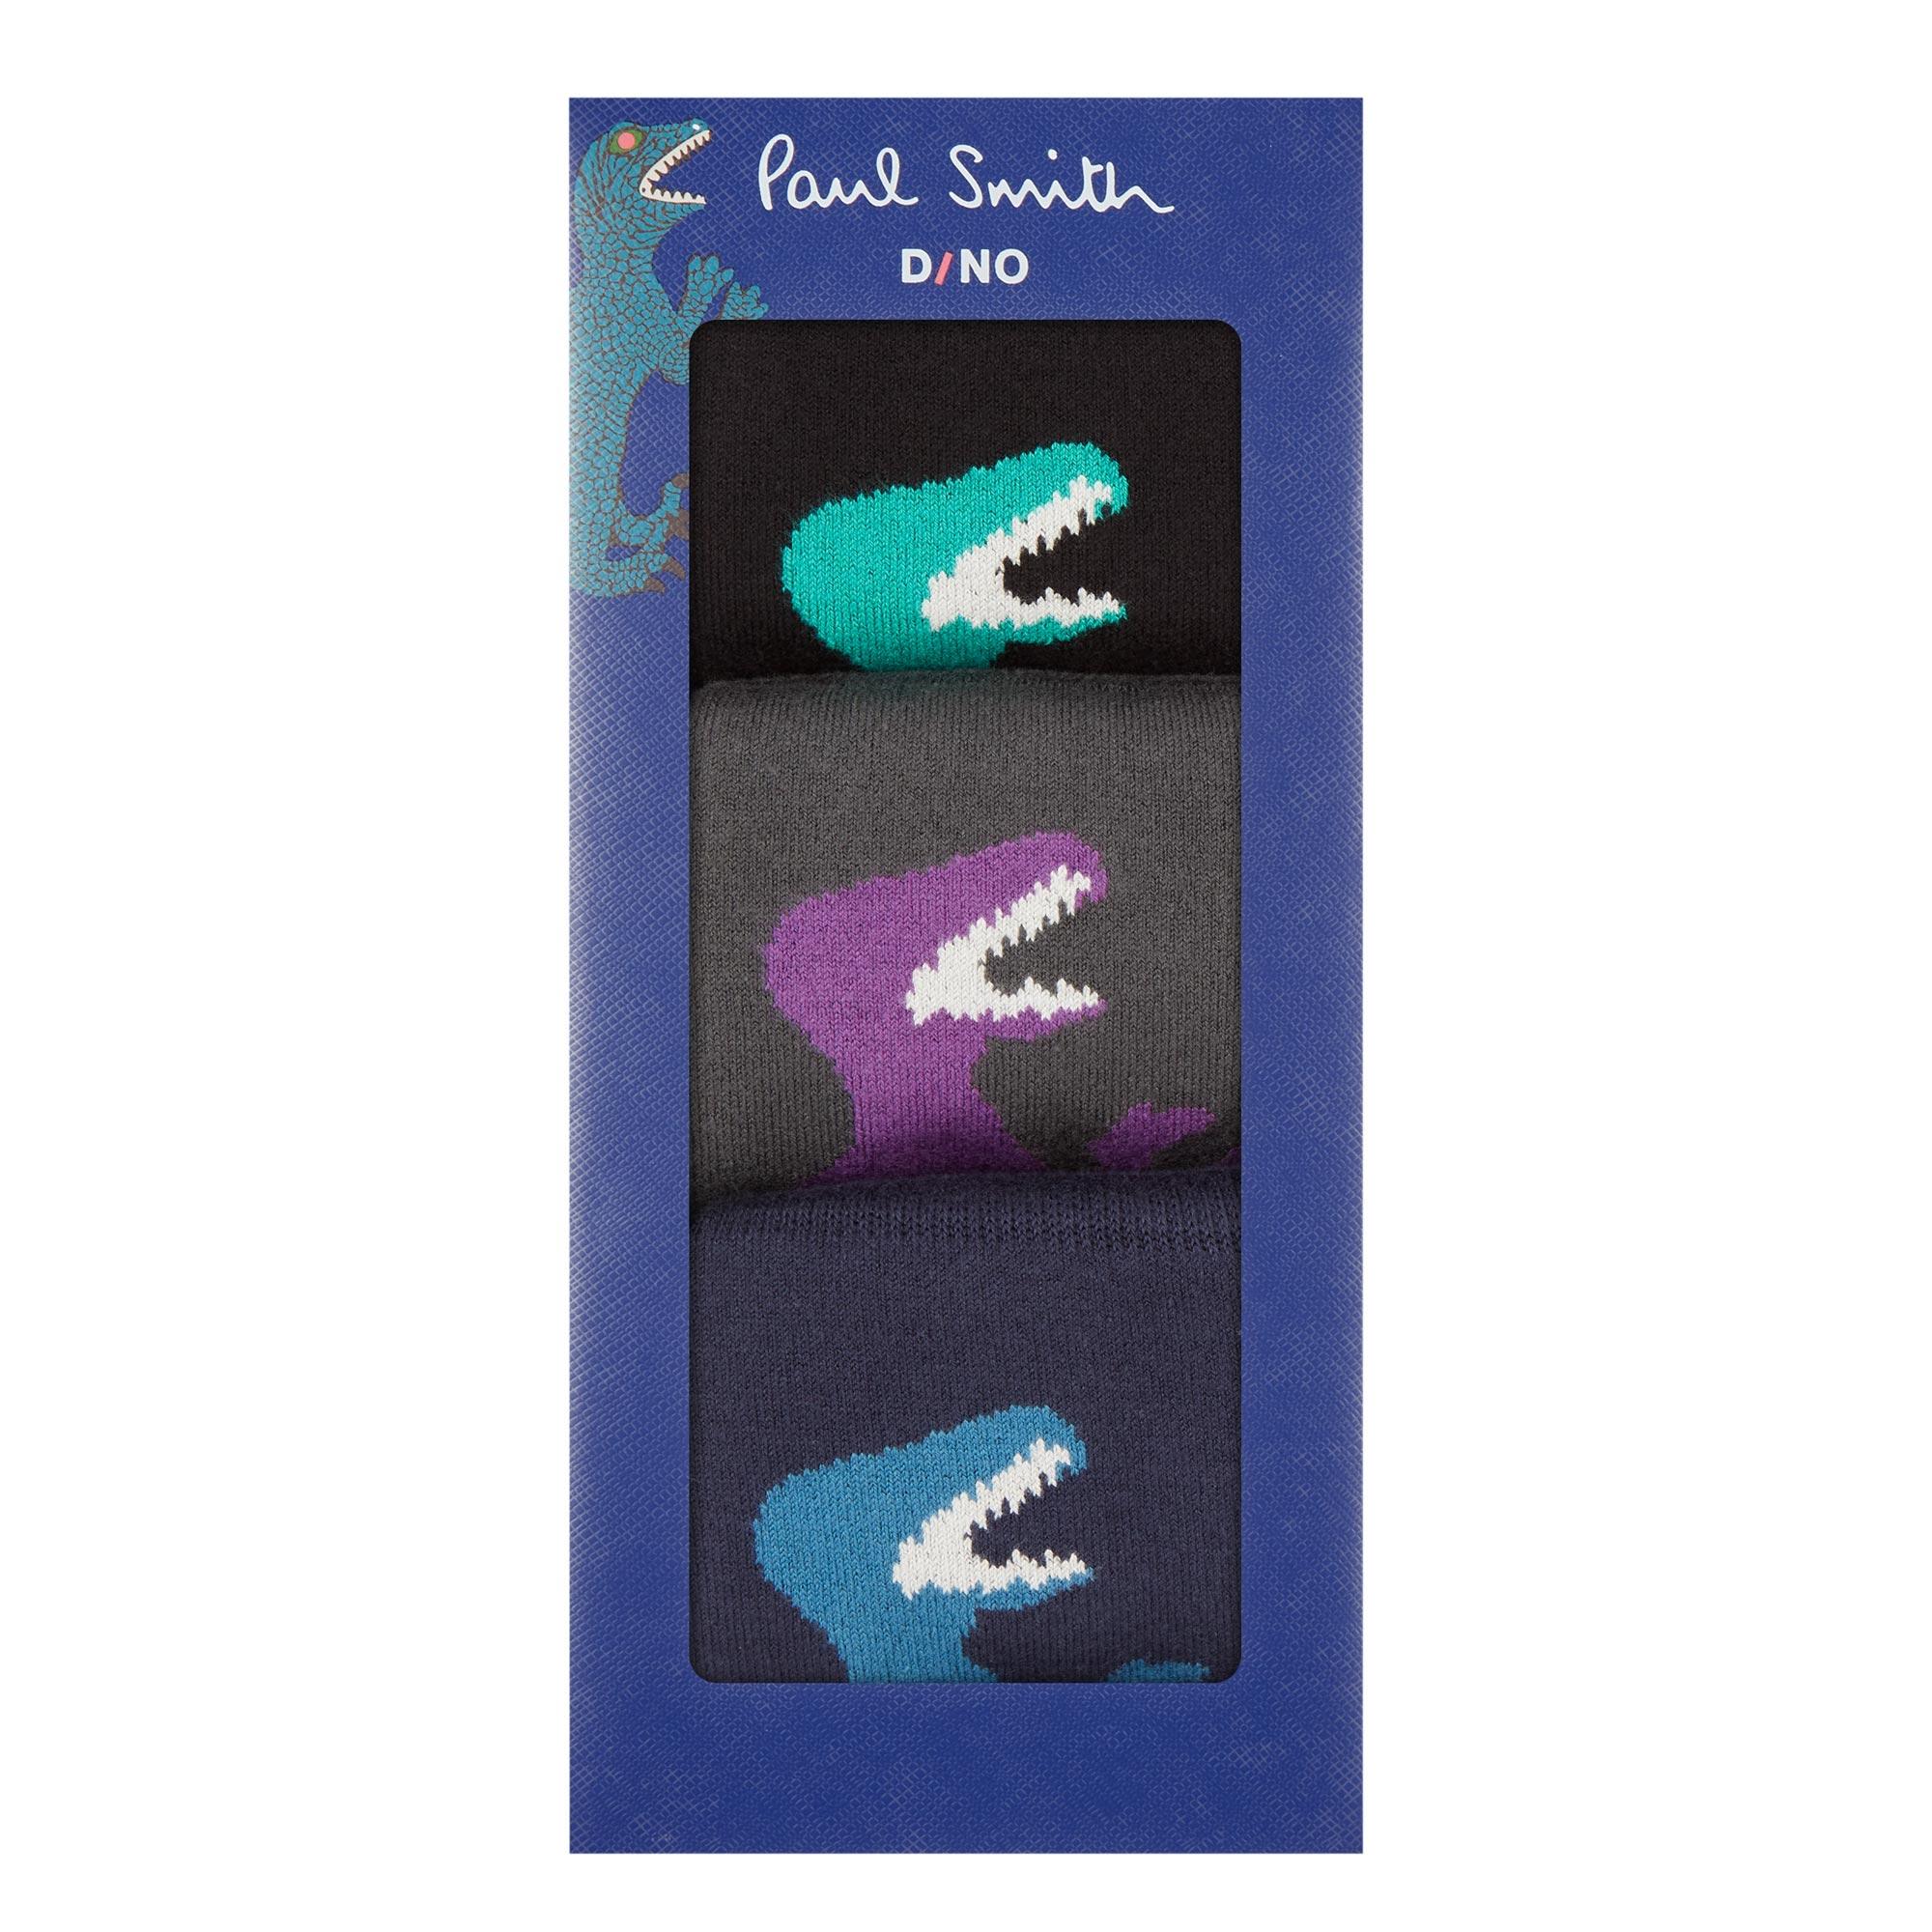 Three-Pack Dinosaur Cotton-Blend Socks